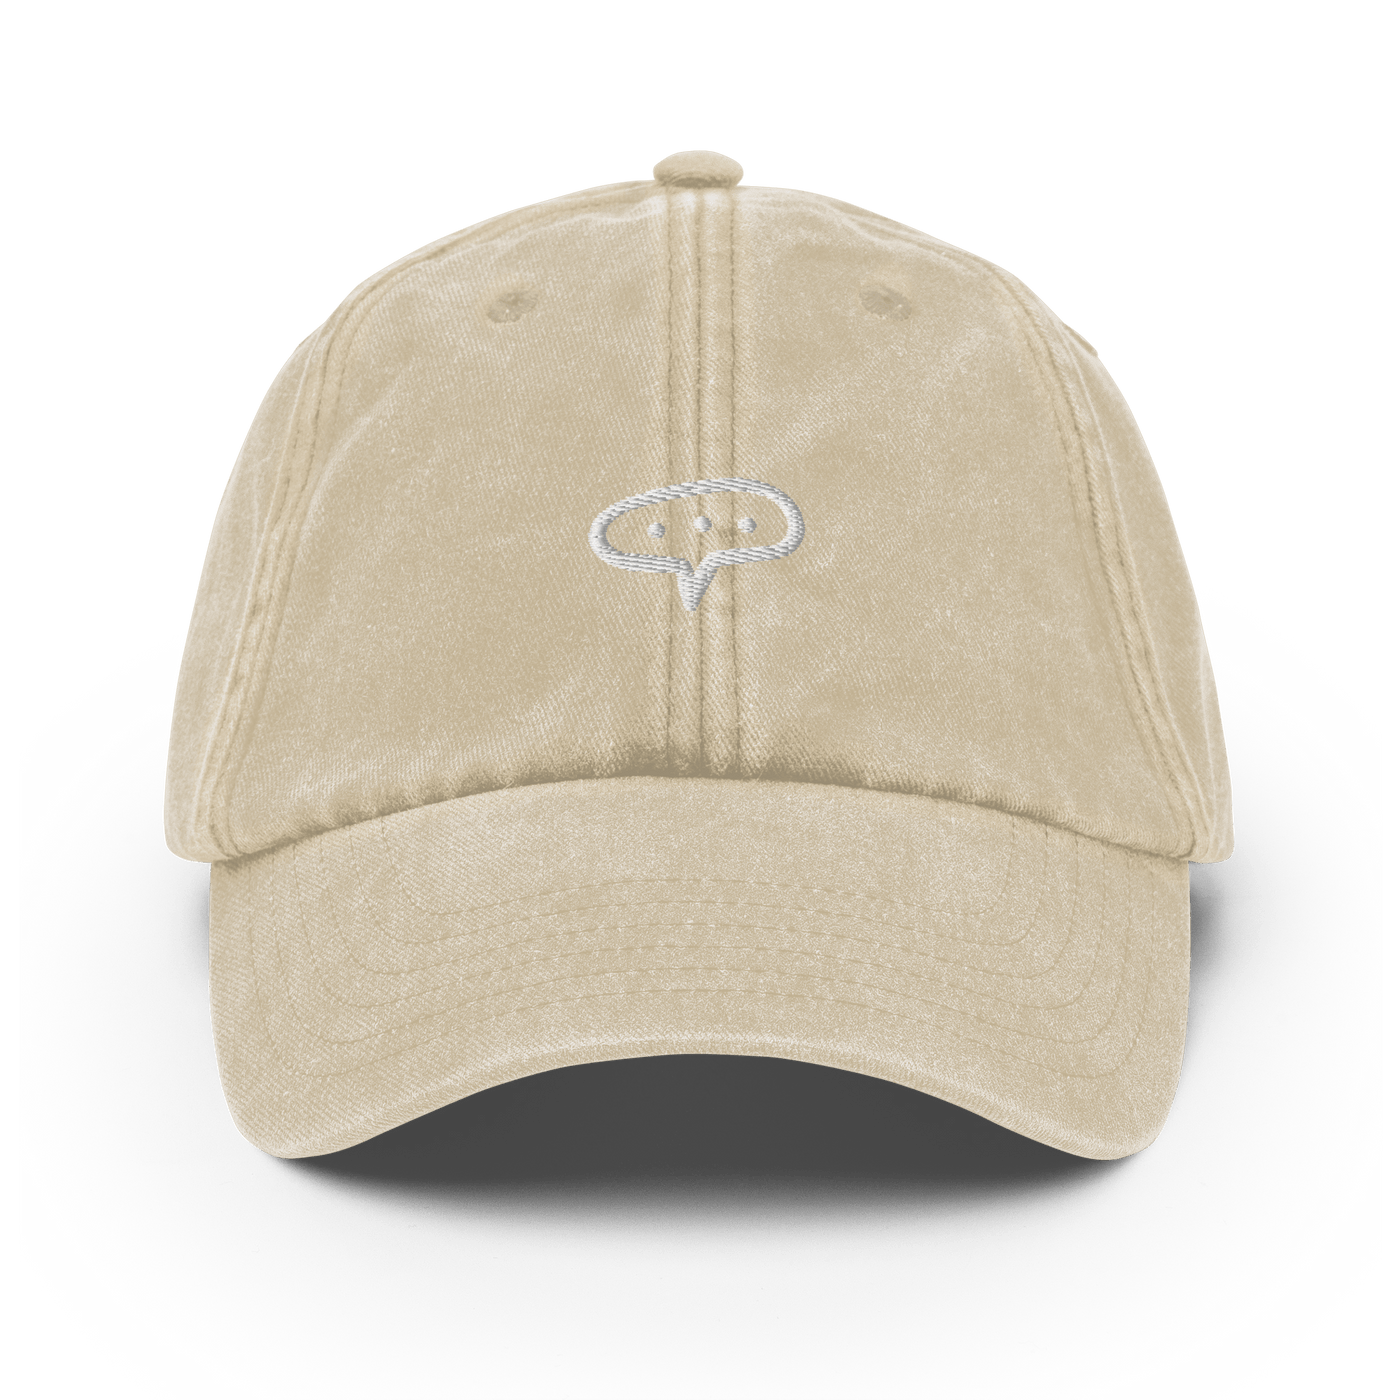 Thinking Vintage Hat - Vintage Light Denim - - Just Another Cap Store